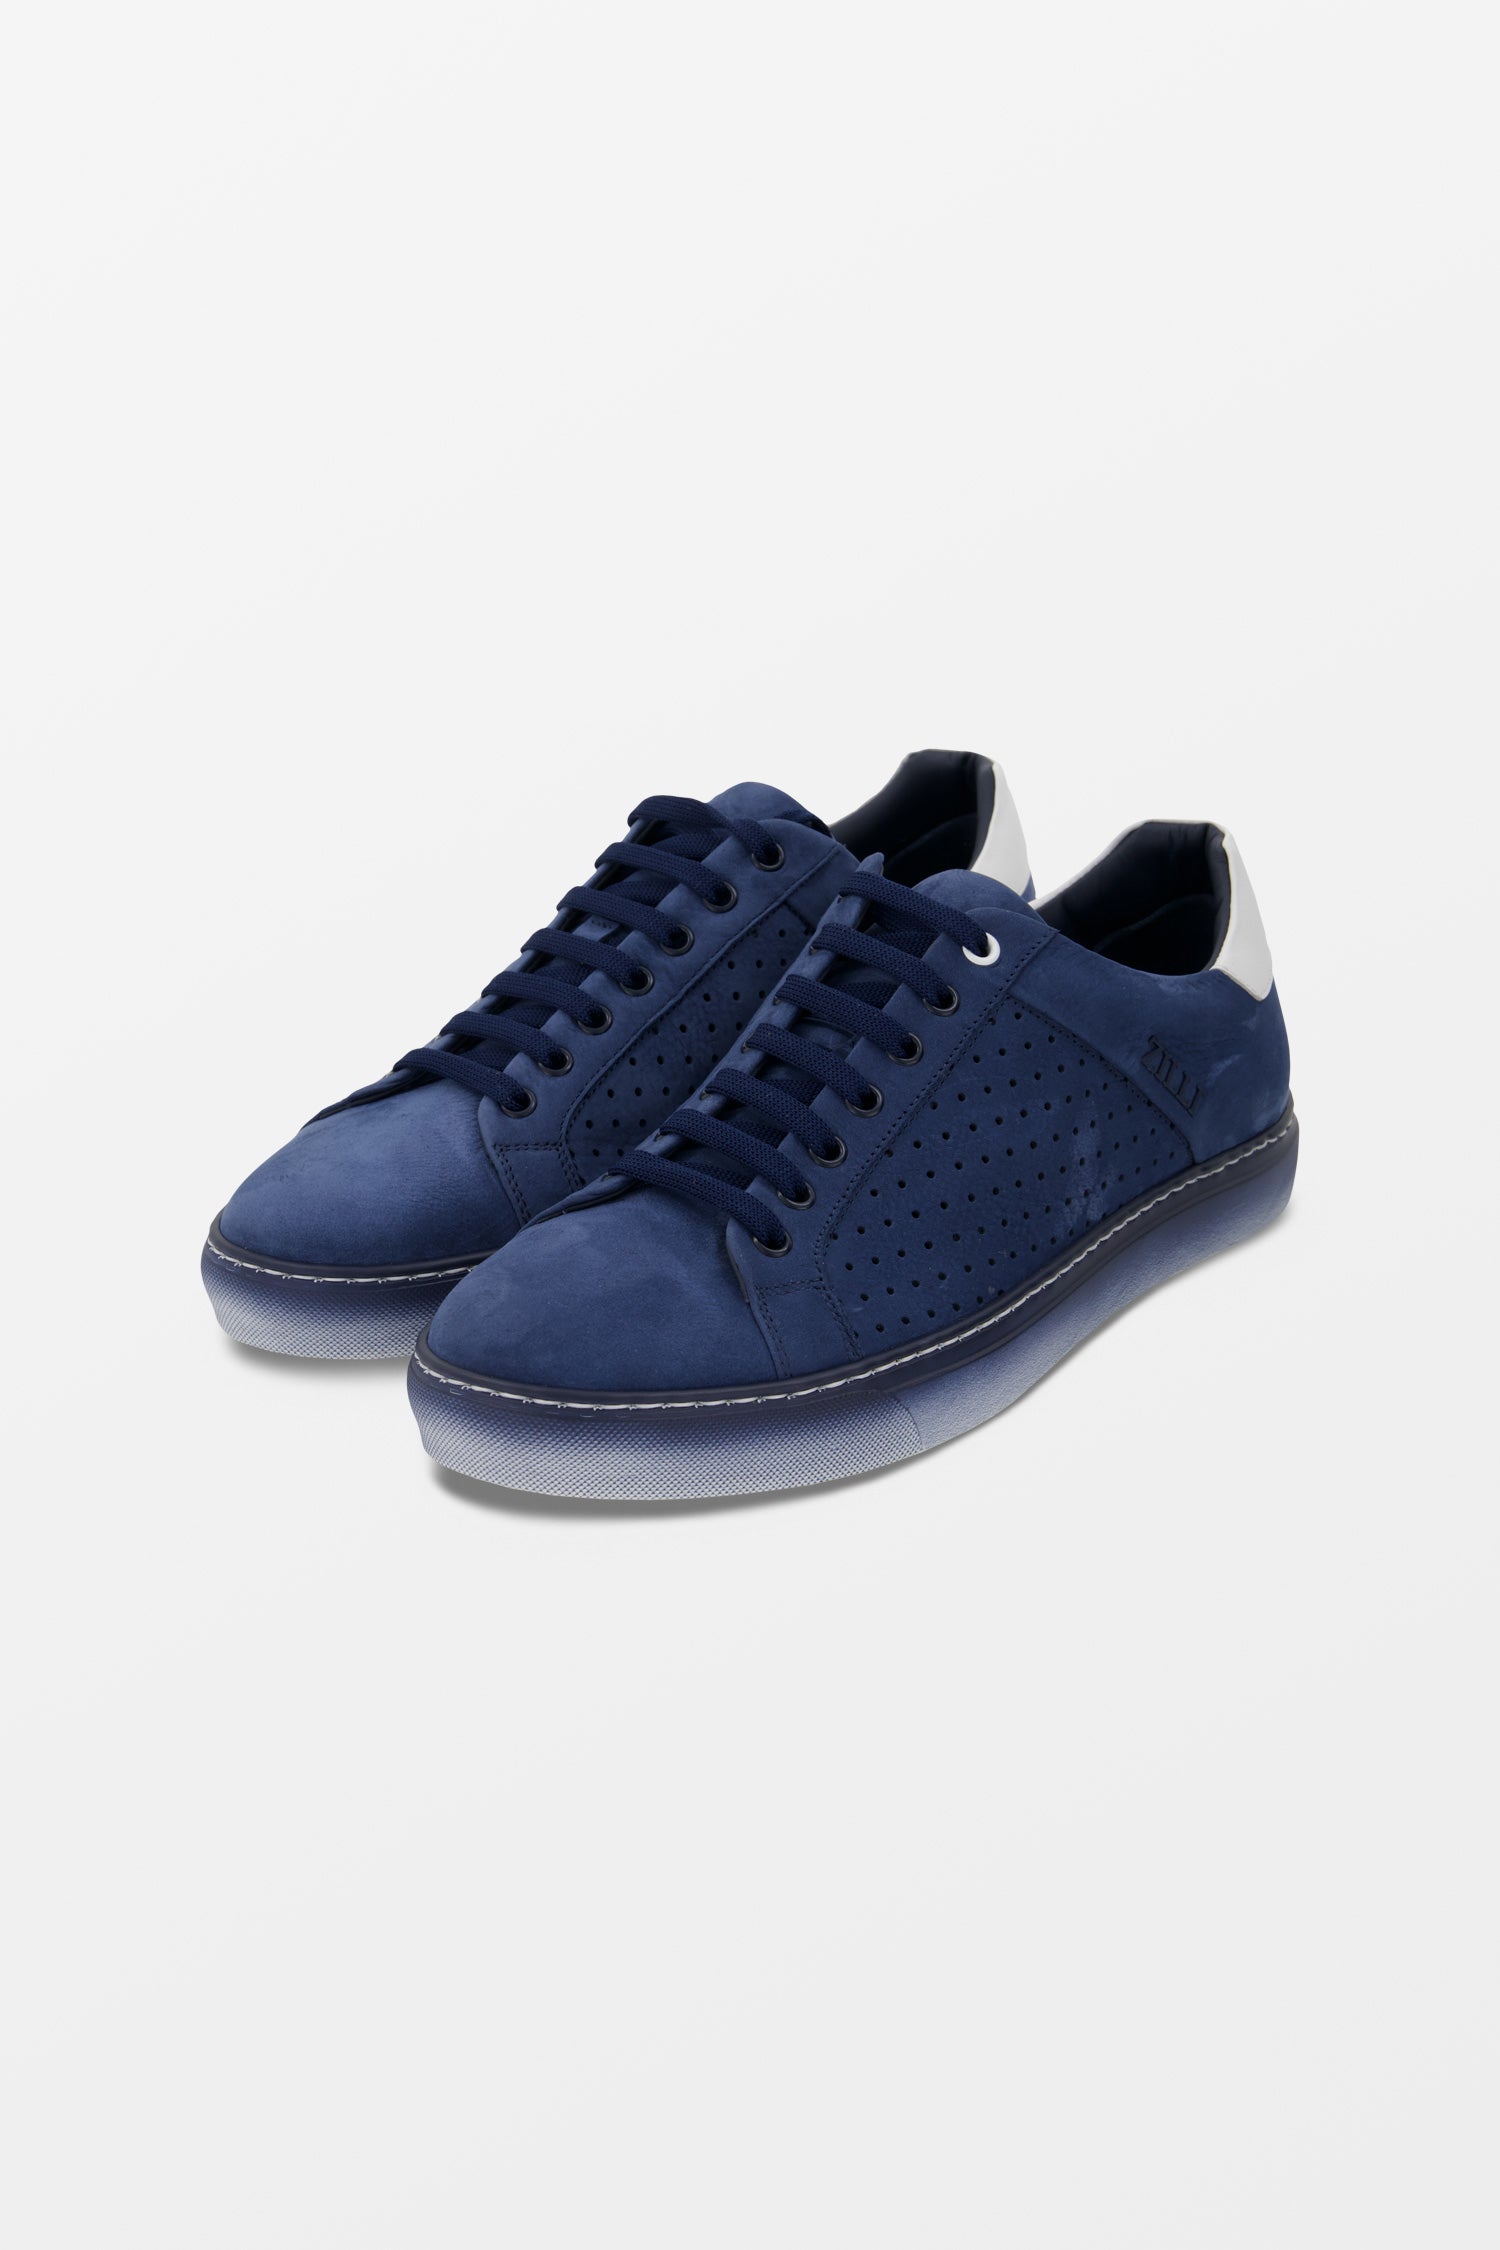 Zilli Soft Nubuck Blue Sneakers